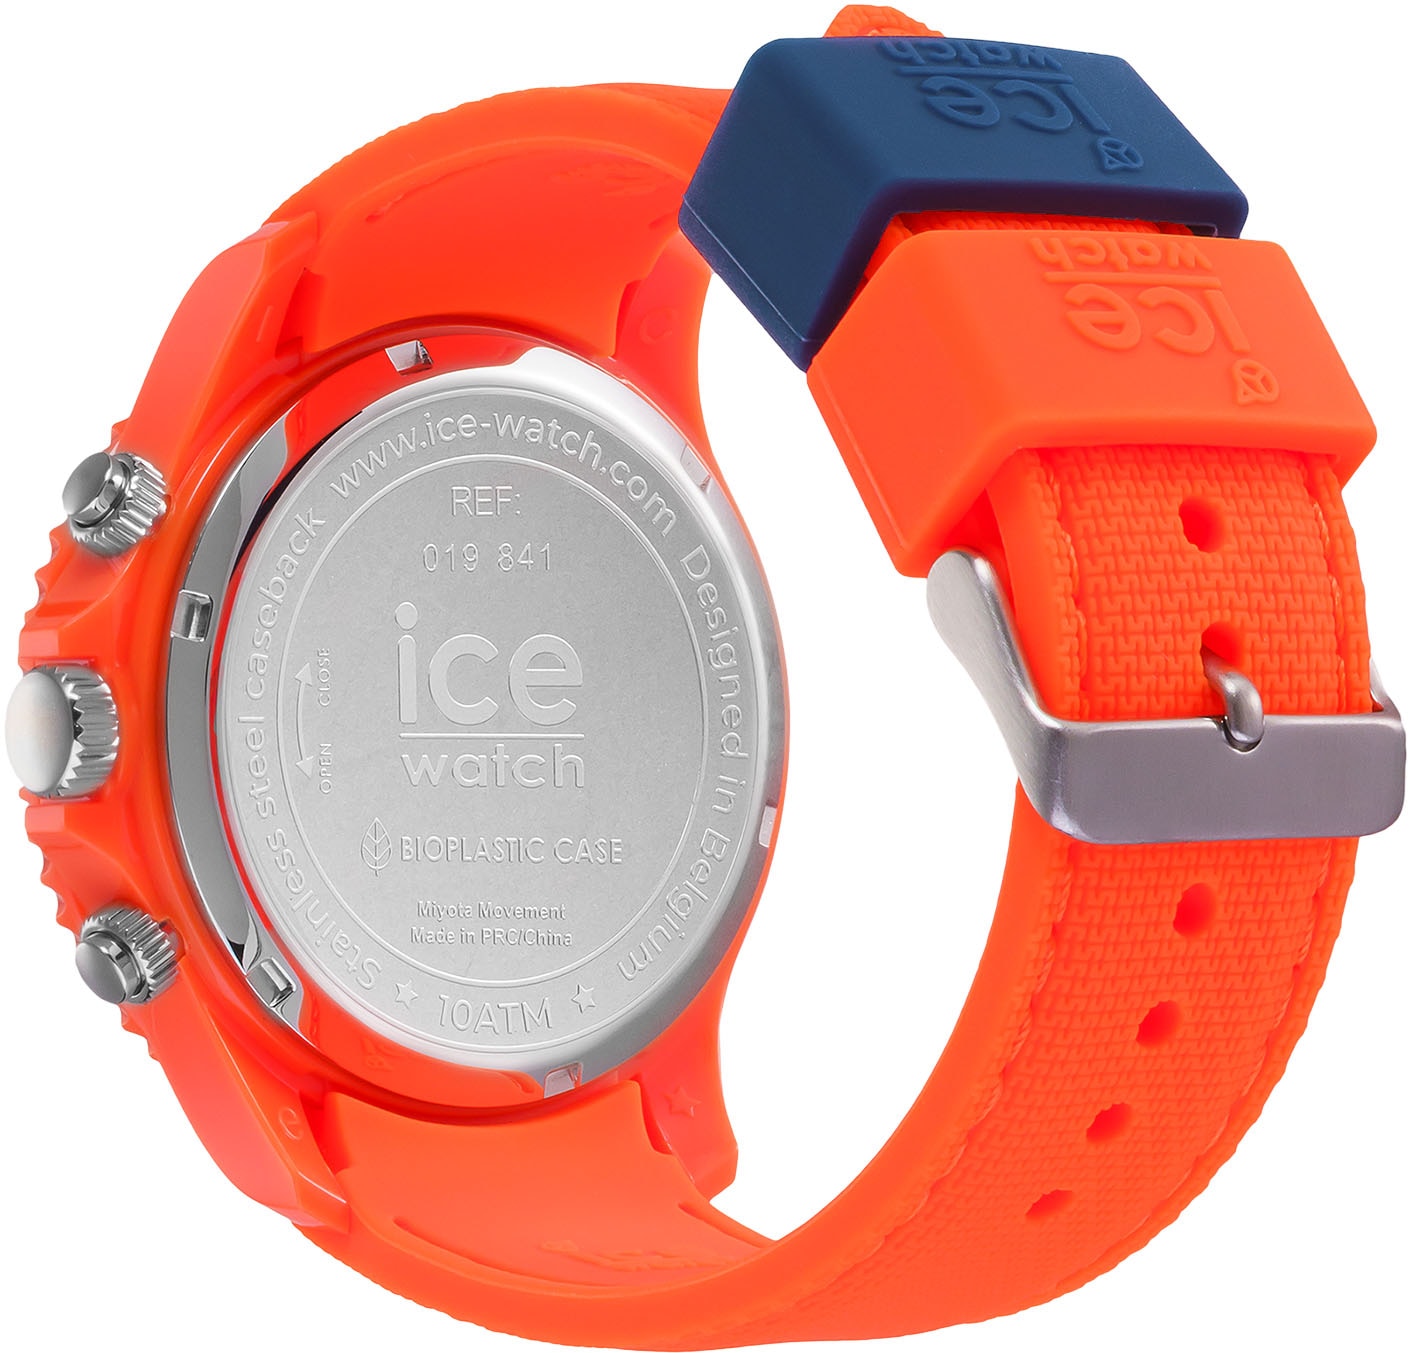 ice-watch Chronograph »ICE chrono - Orange - - ♕ bei CH, 019841« blue Large